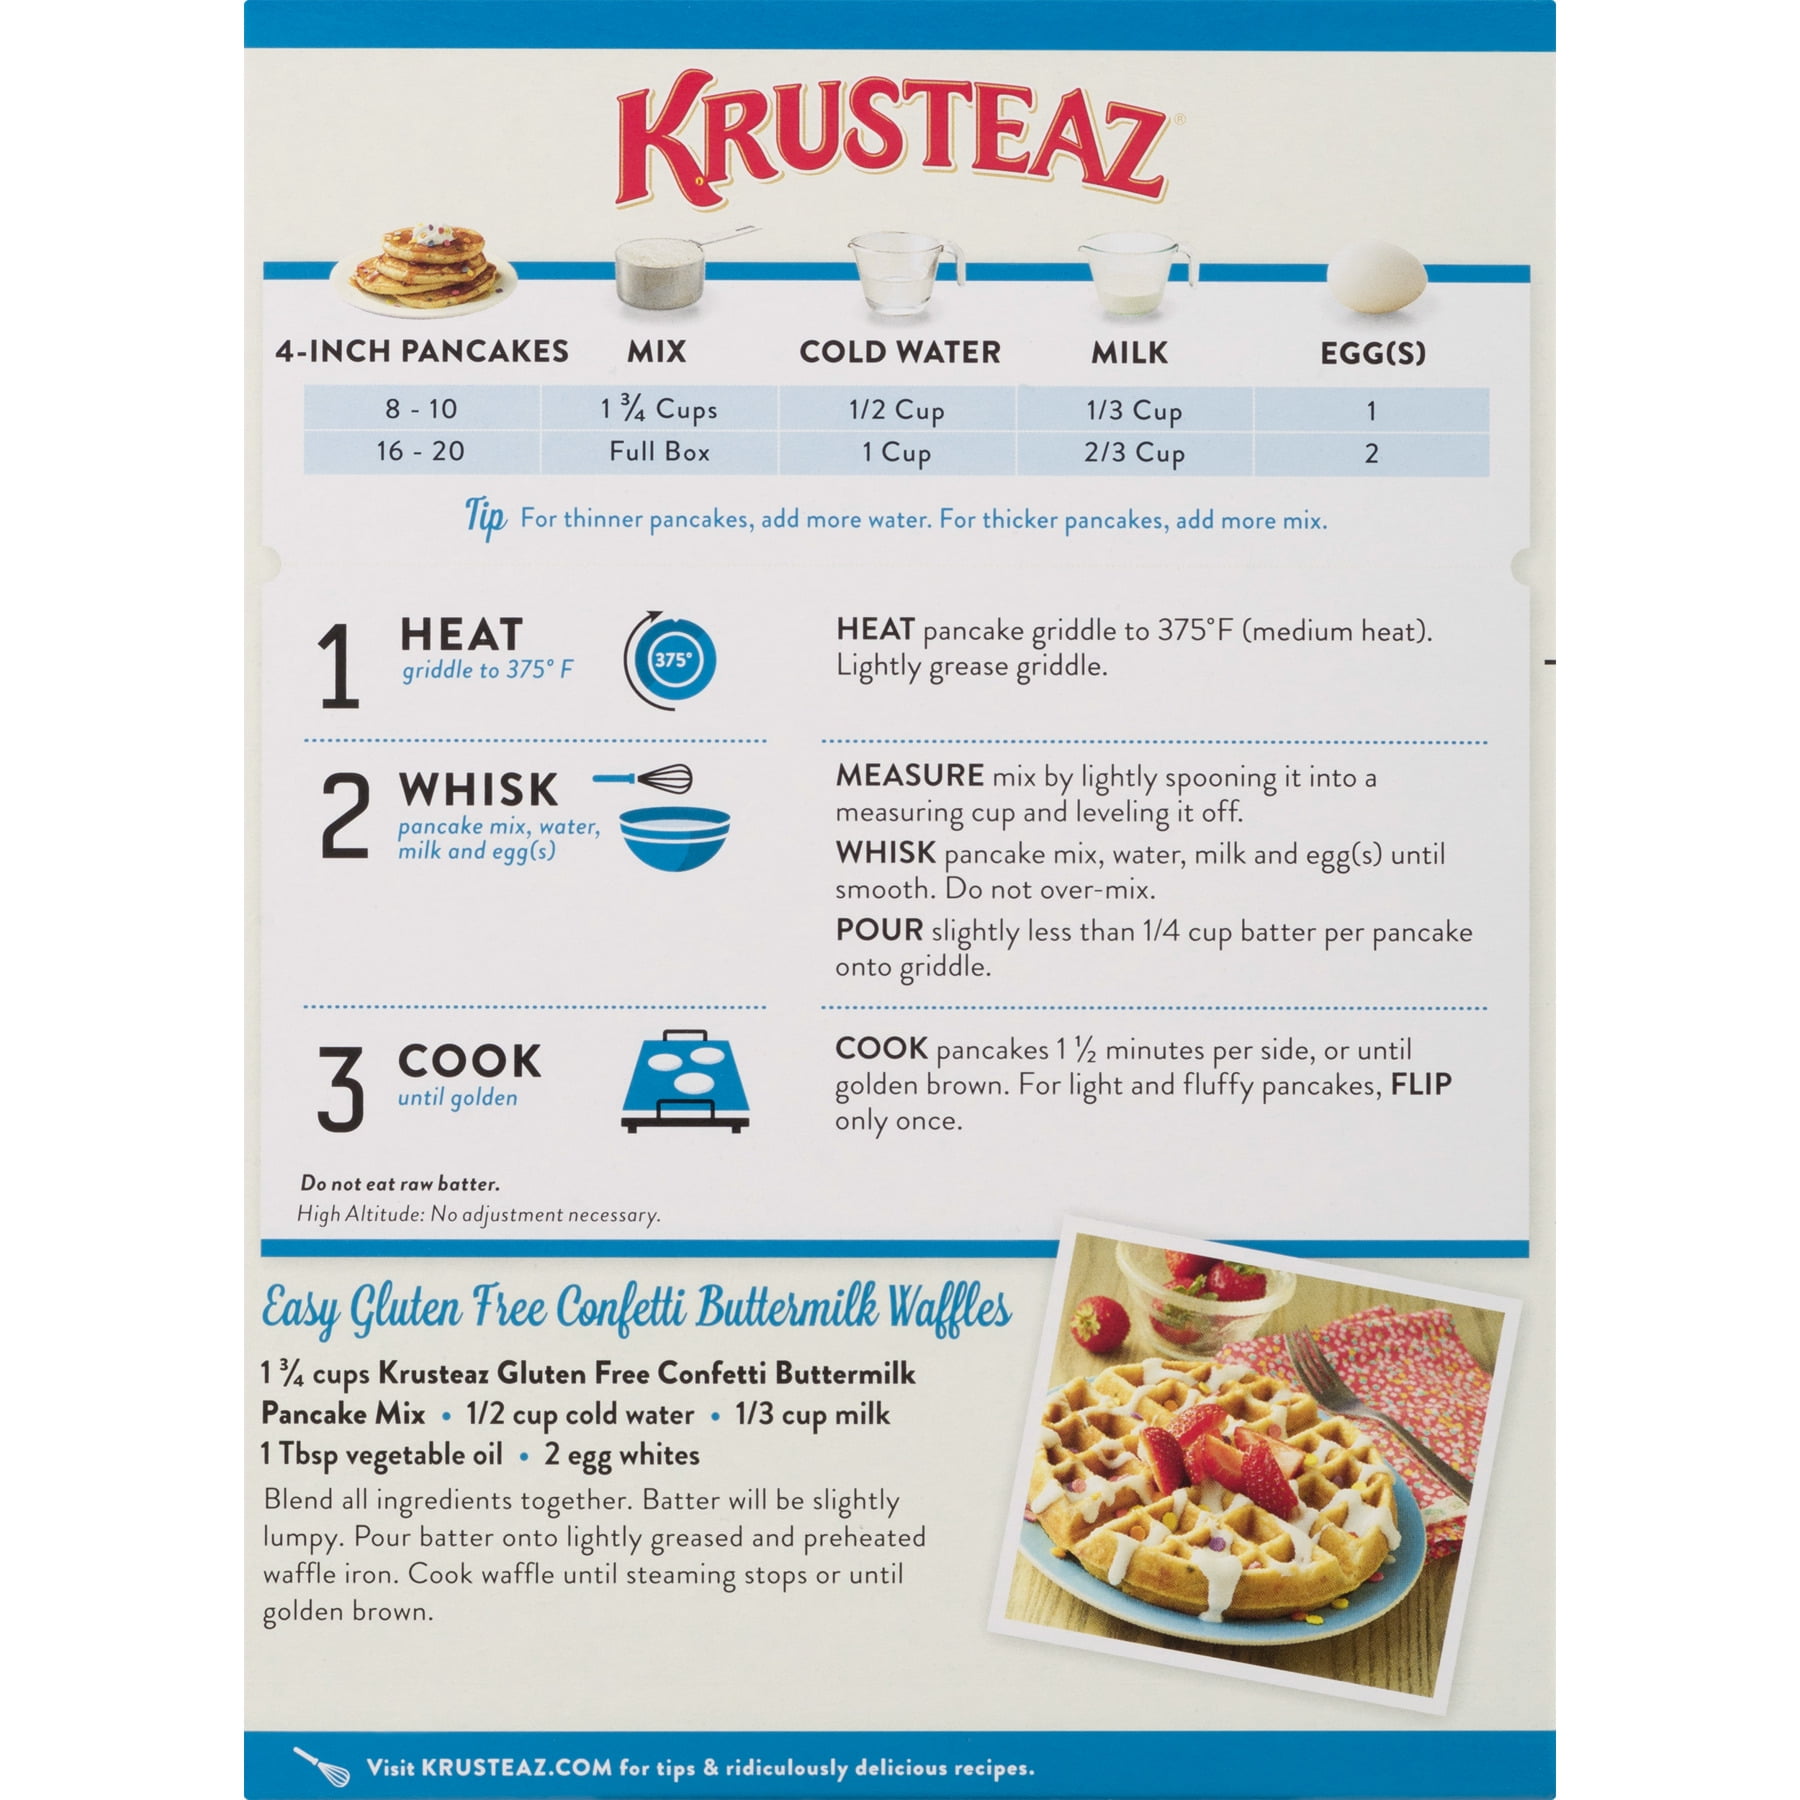 Krusteaz Buttermilk Pancake Mix Recipes